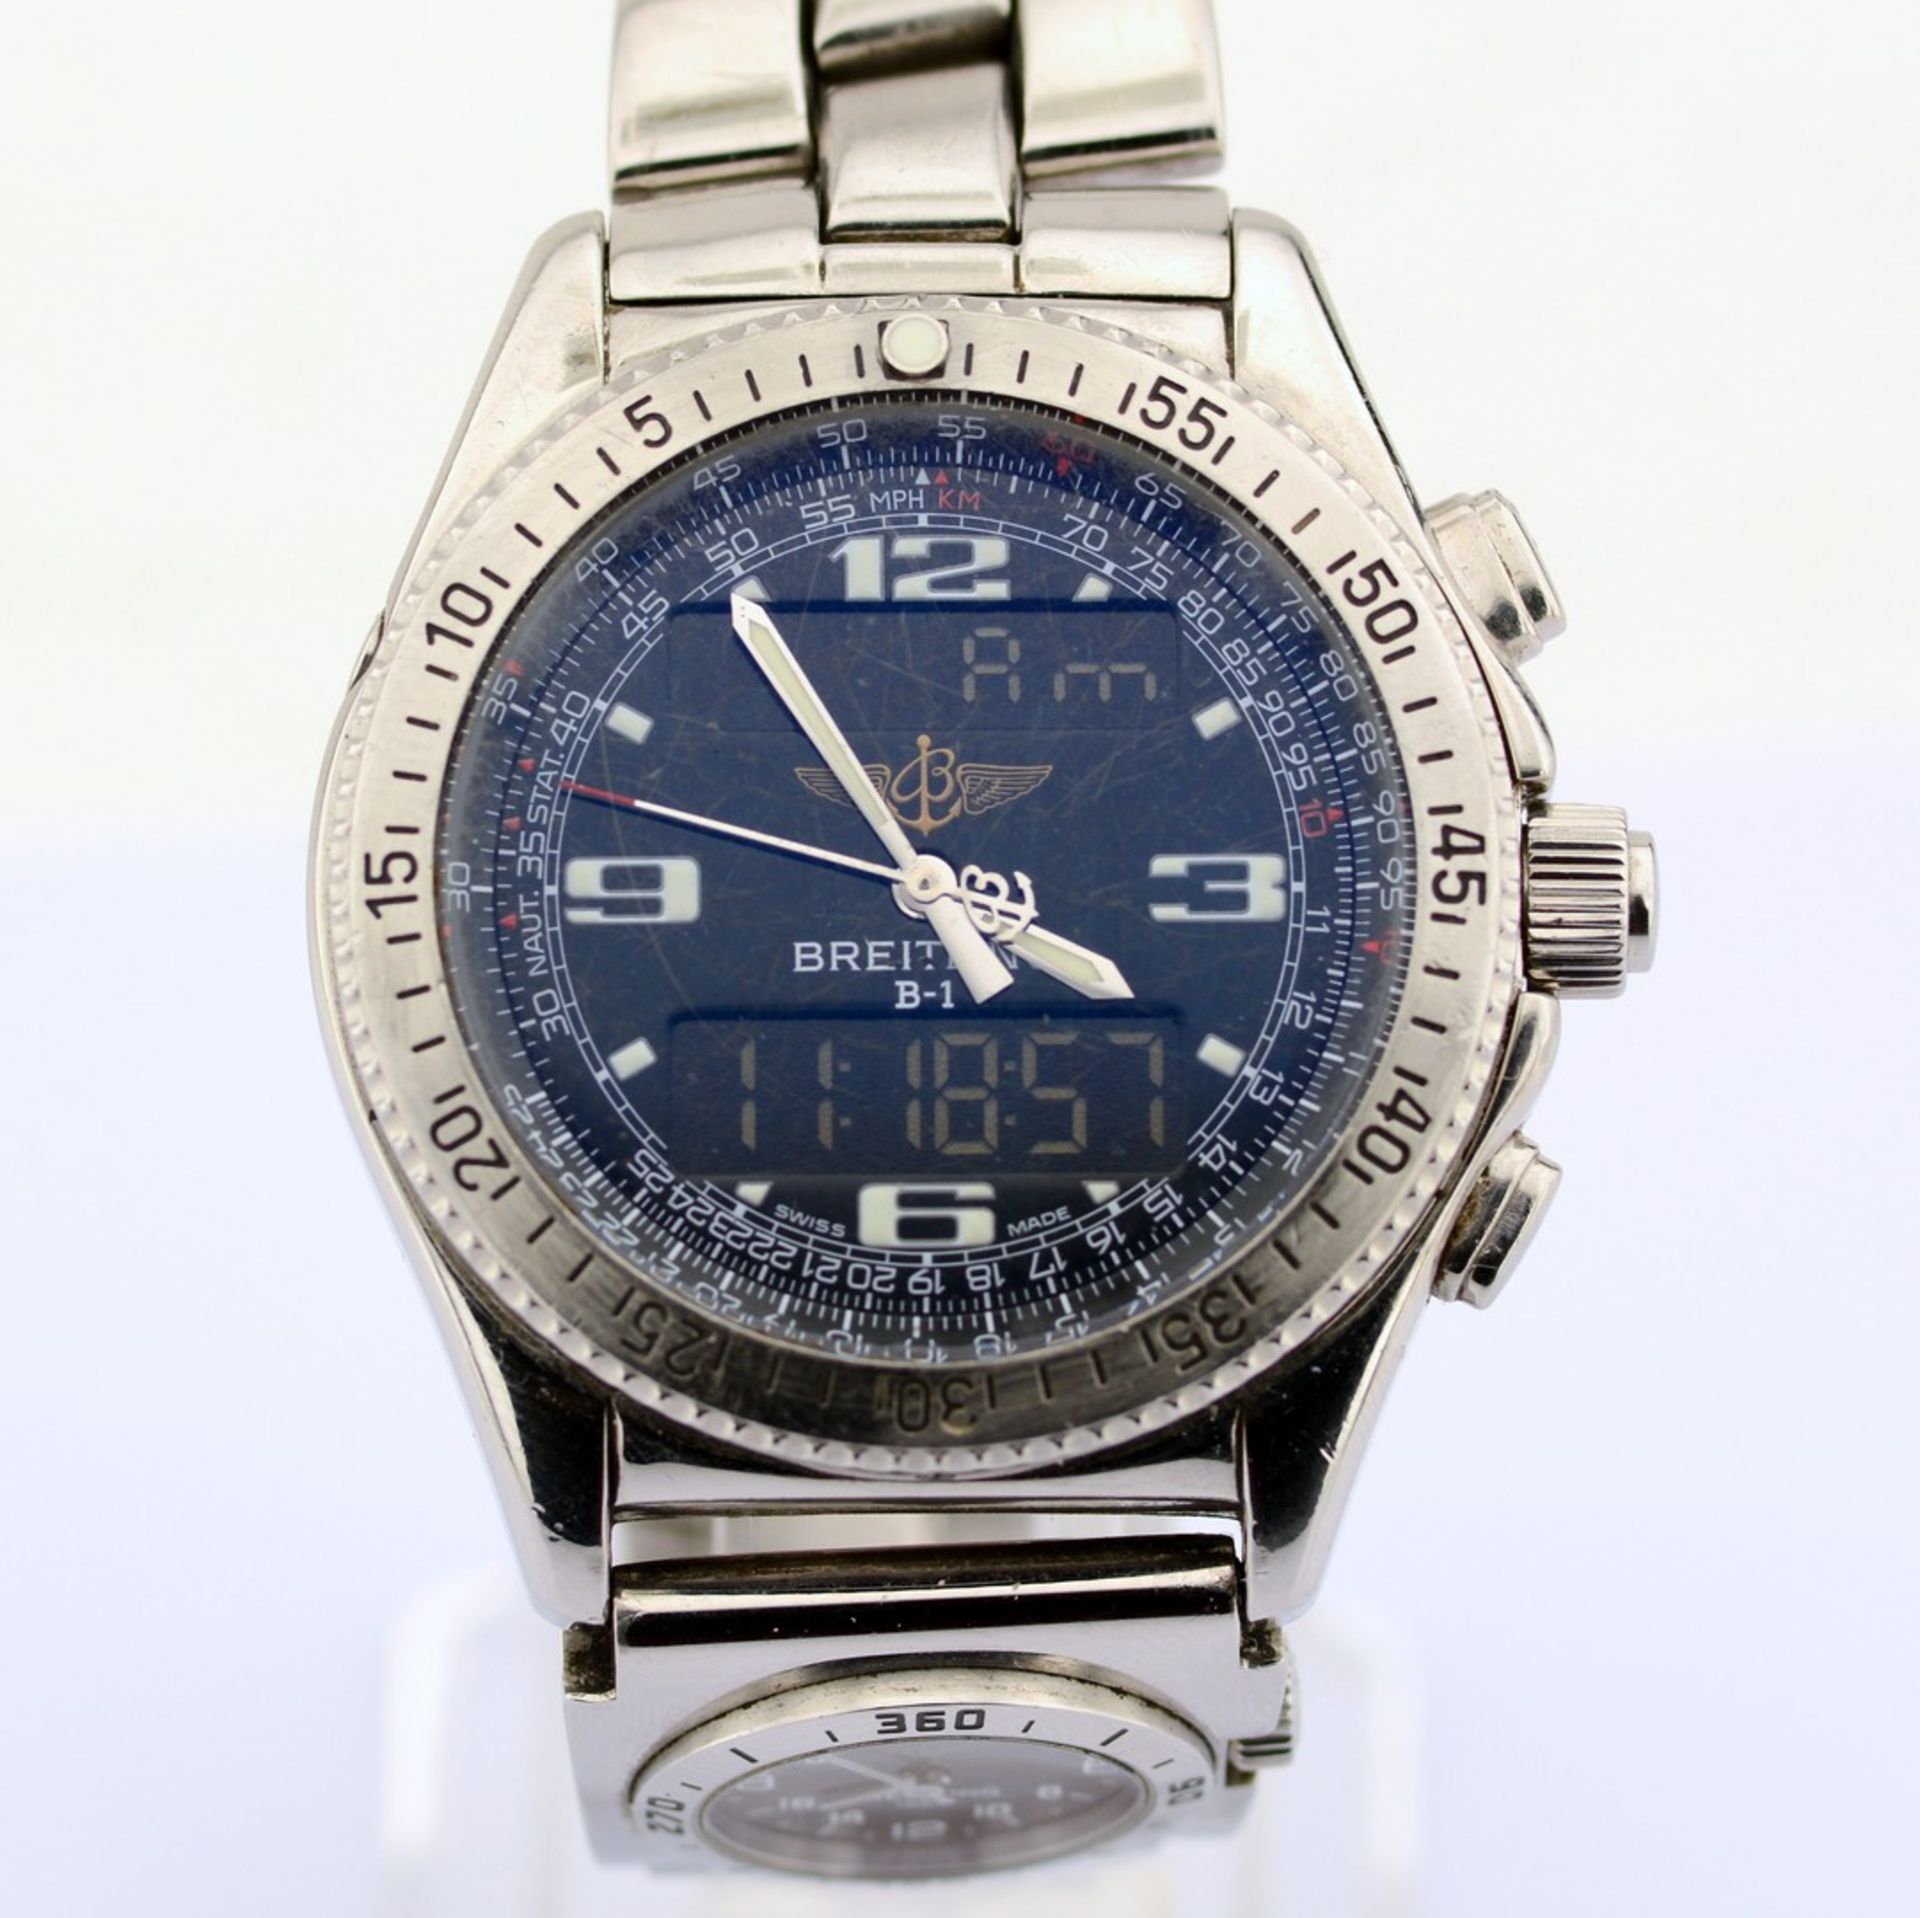 Breitling / A68362 B-1 With UTC Module - Gentlemen's Steel Wristwatch - Image 6 of 12